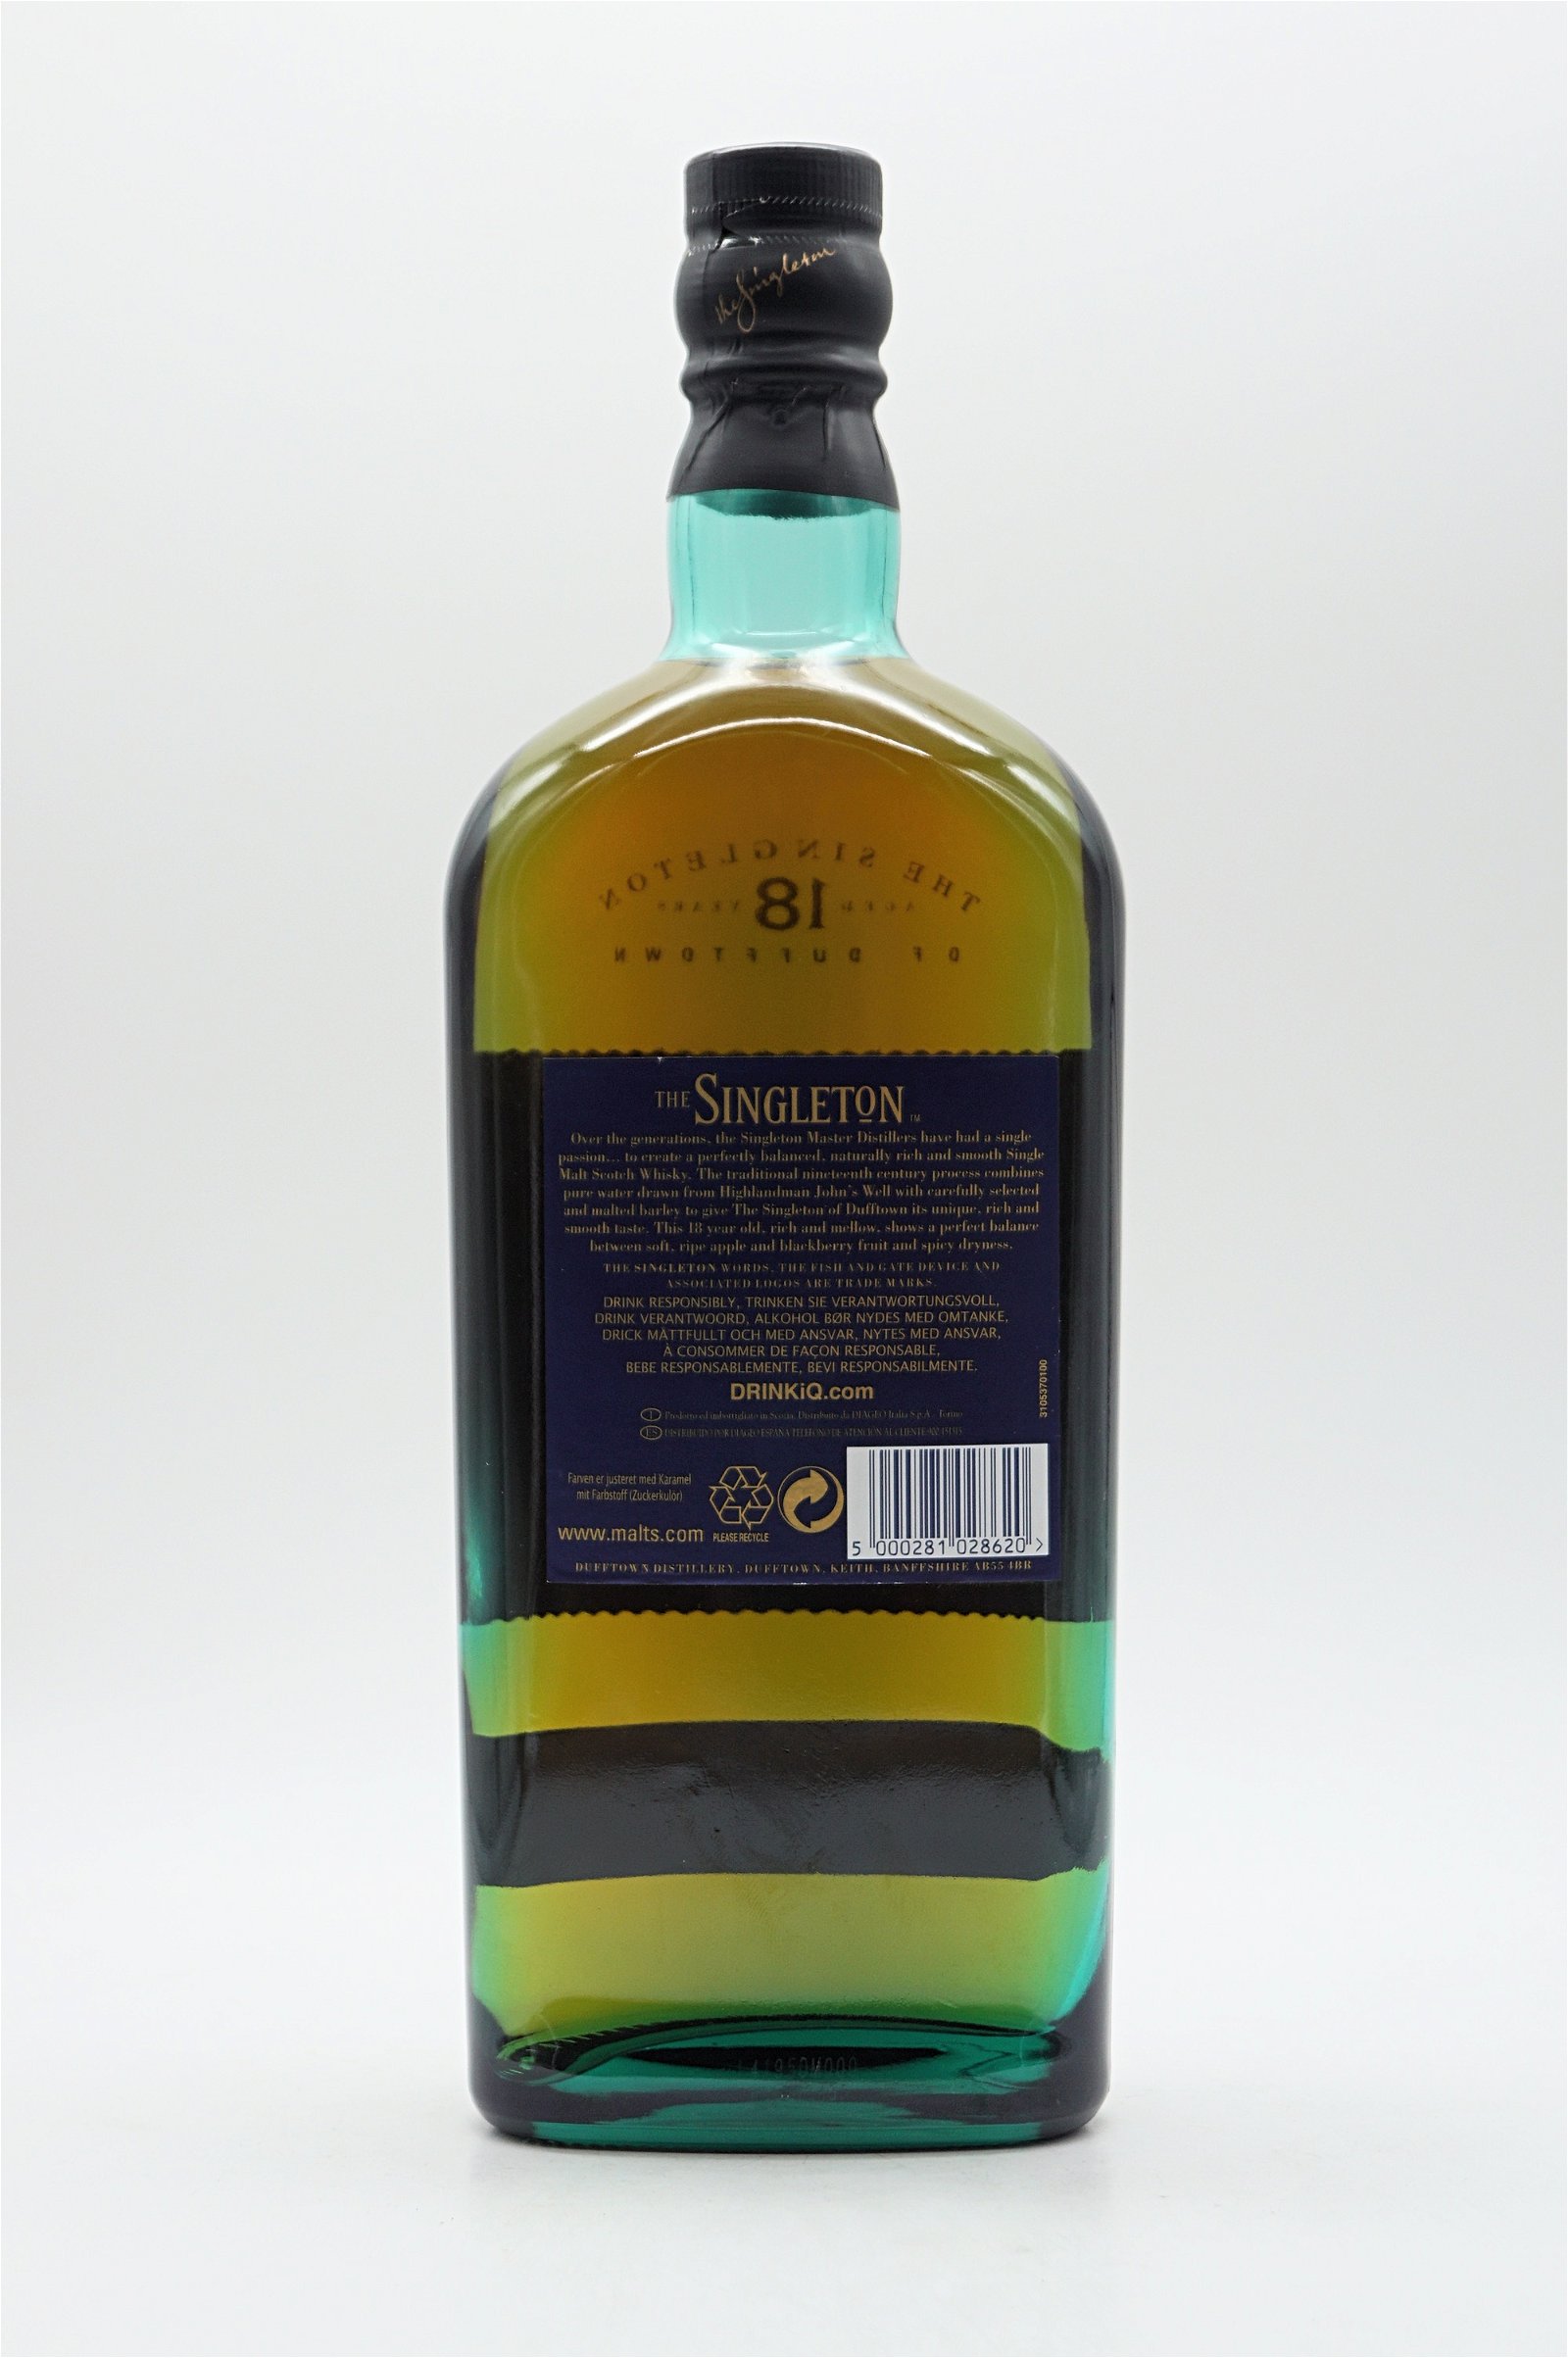 The Singleton of Dufftown 18 Jahre Single Malt Scotch Whisky